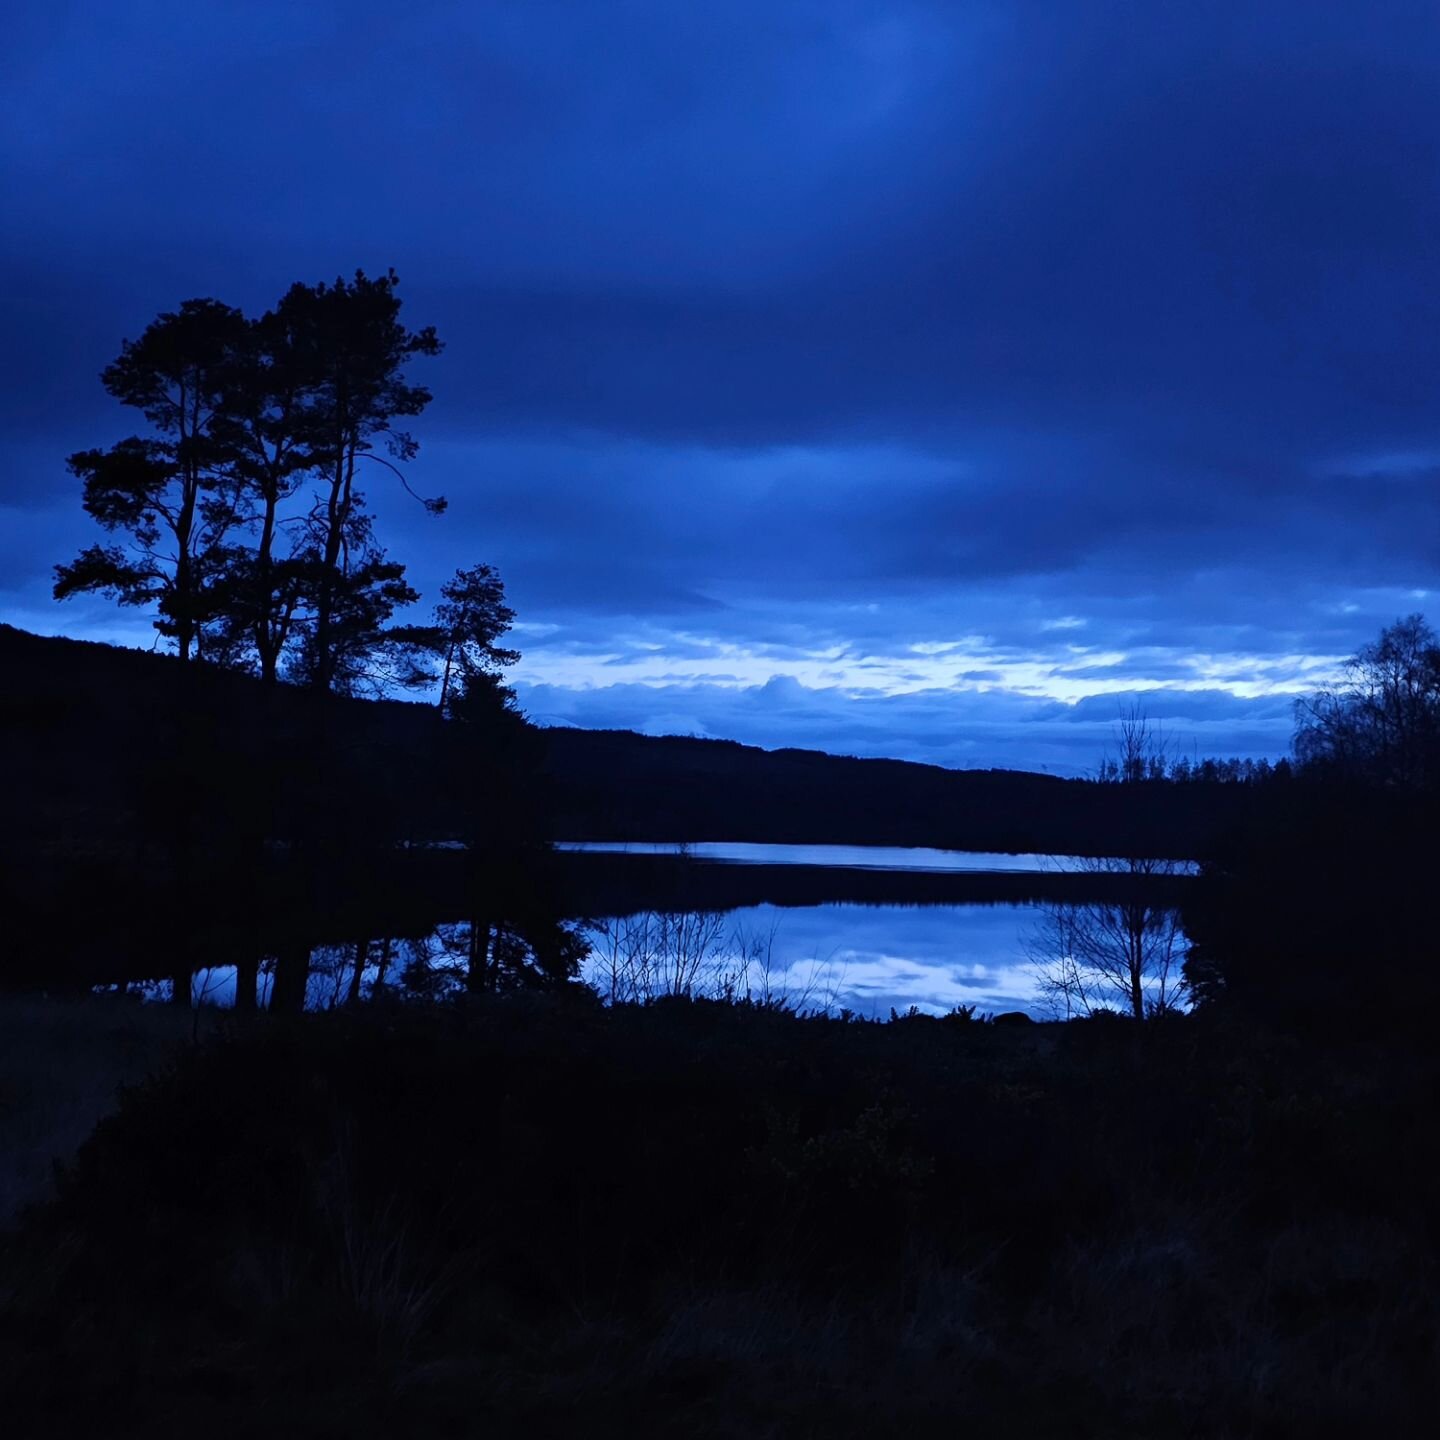 Morning reflections 

#lochrusky #cassafuir #hereandnowpods #morning #glamping #luxuryglamping #visitscotland #trossachs #scotland #wildswim #reflections #scotspine #sky